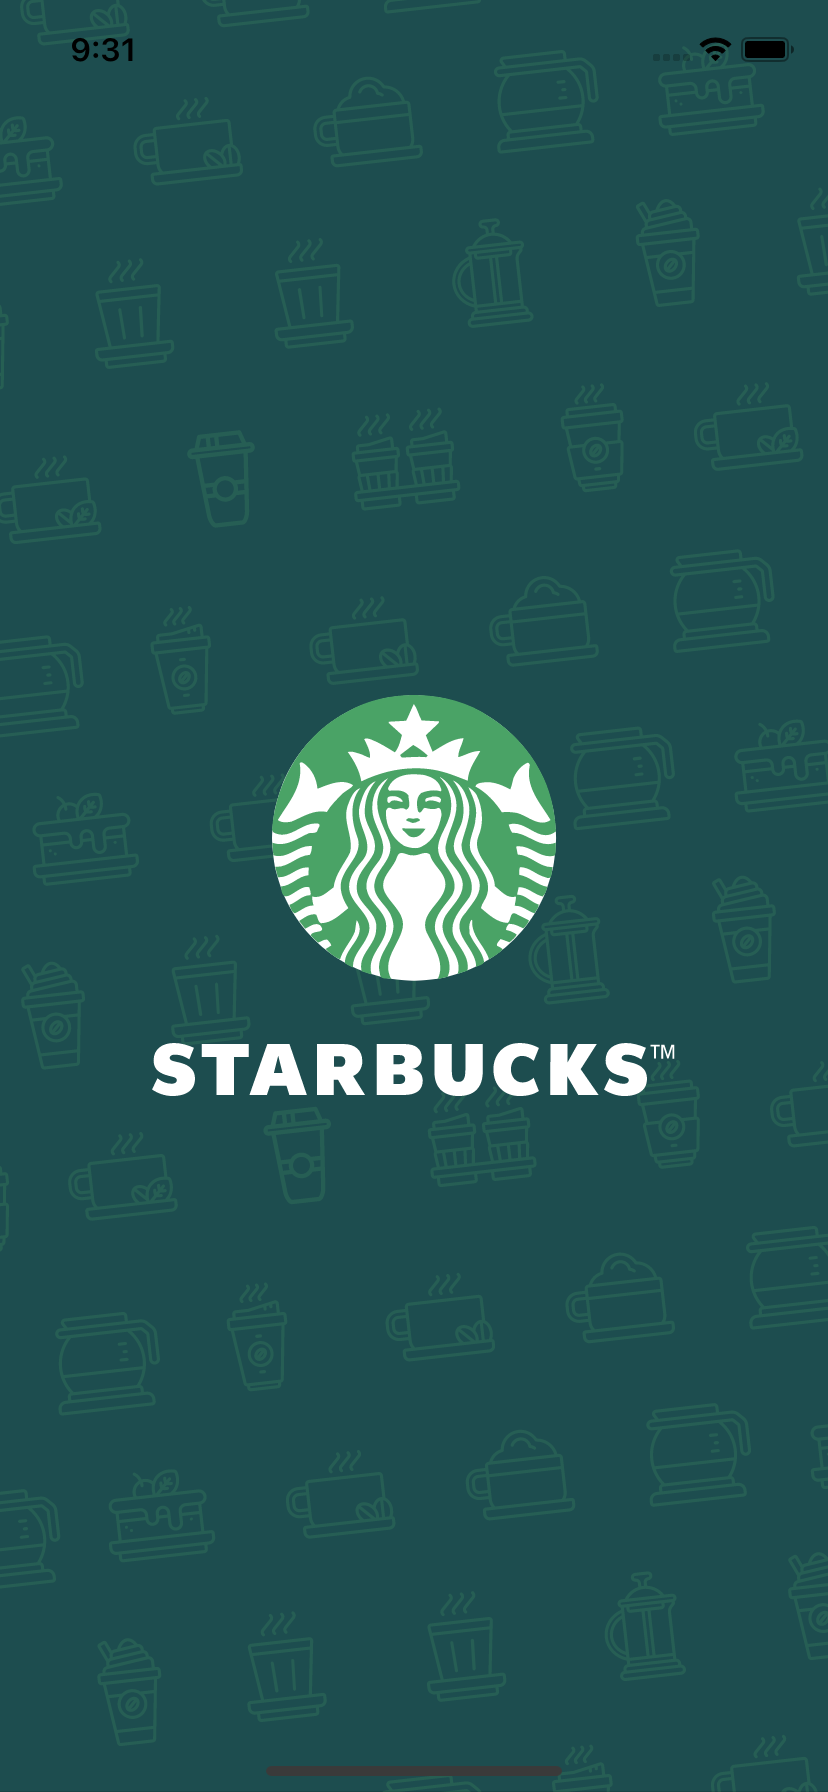 Starbucks App Redesign is a small Flutter UI Challange